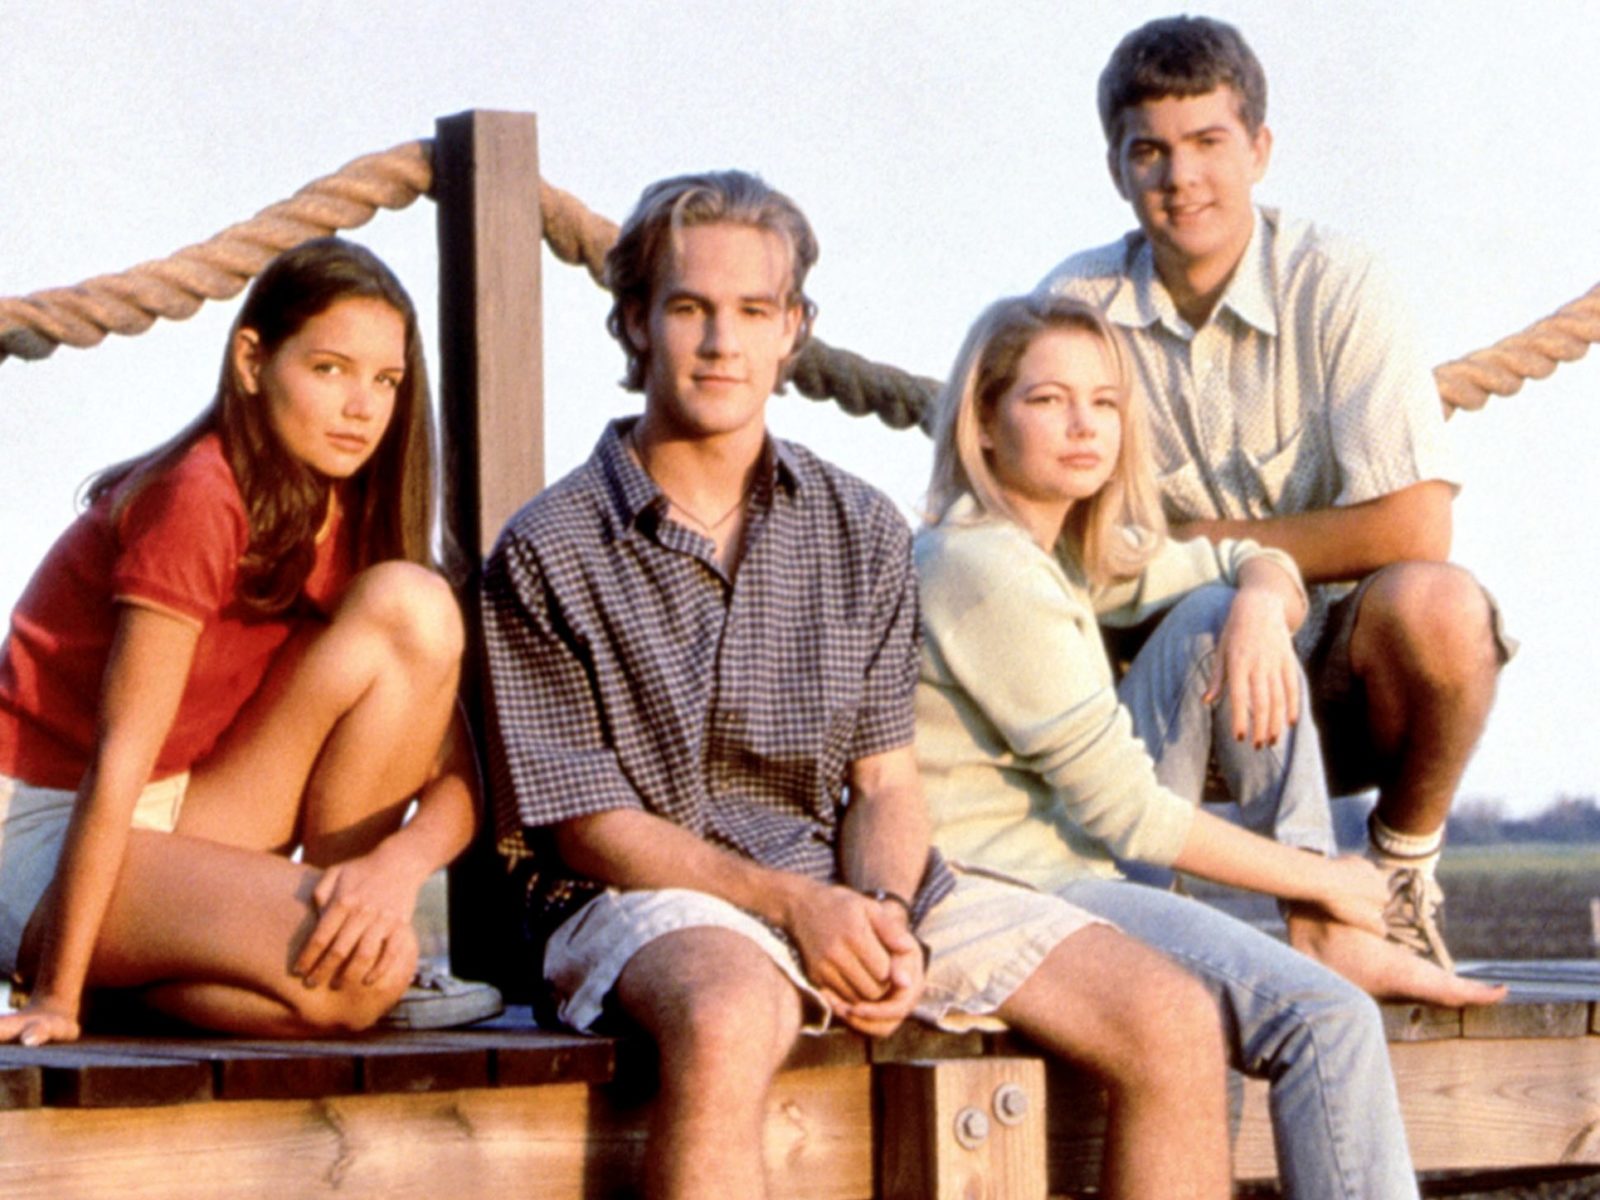 Dawson's Creek cast in a posed photo